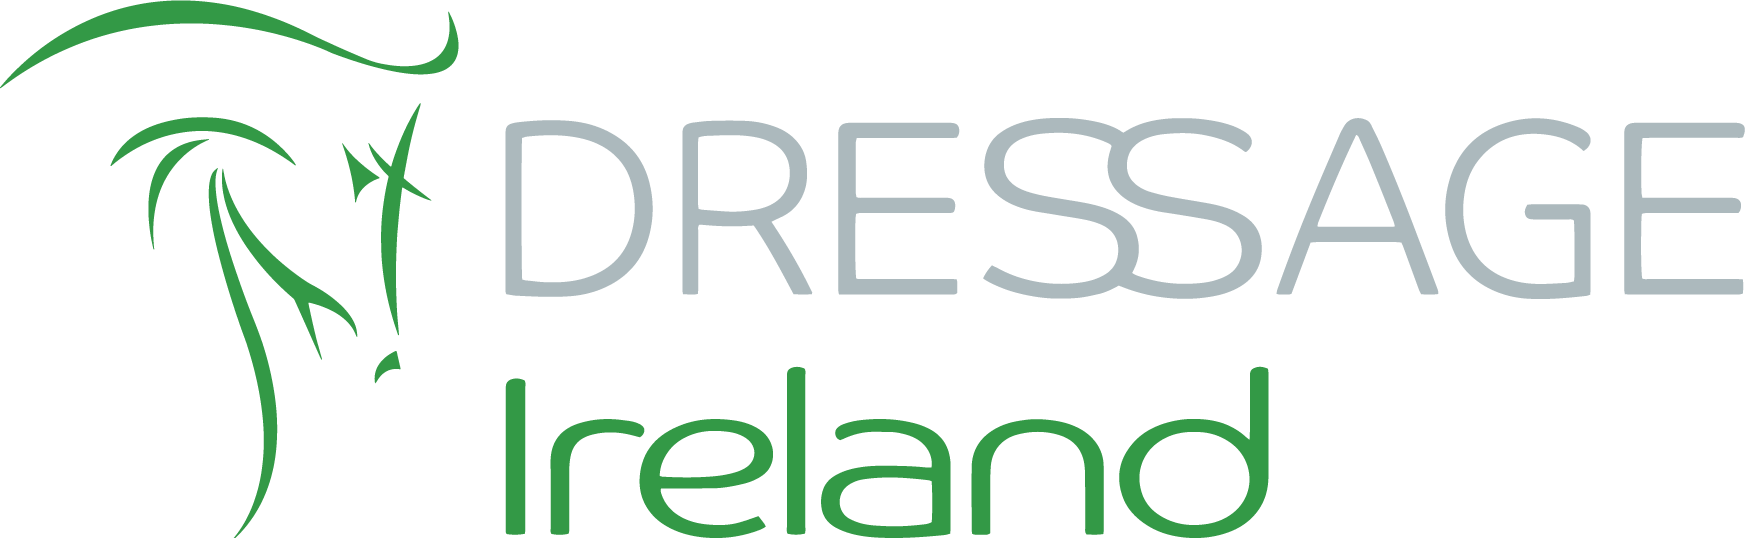 Dressage Ireland Show at Marlton Eq